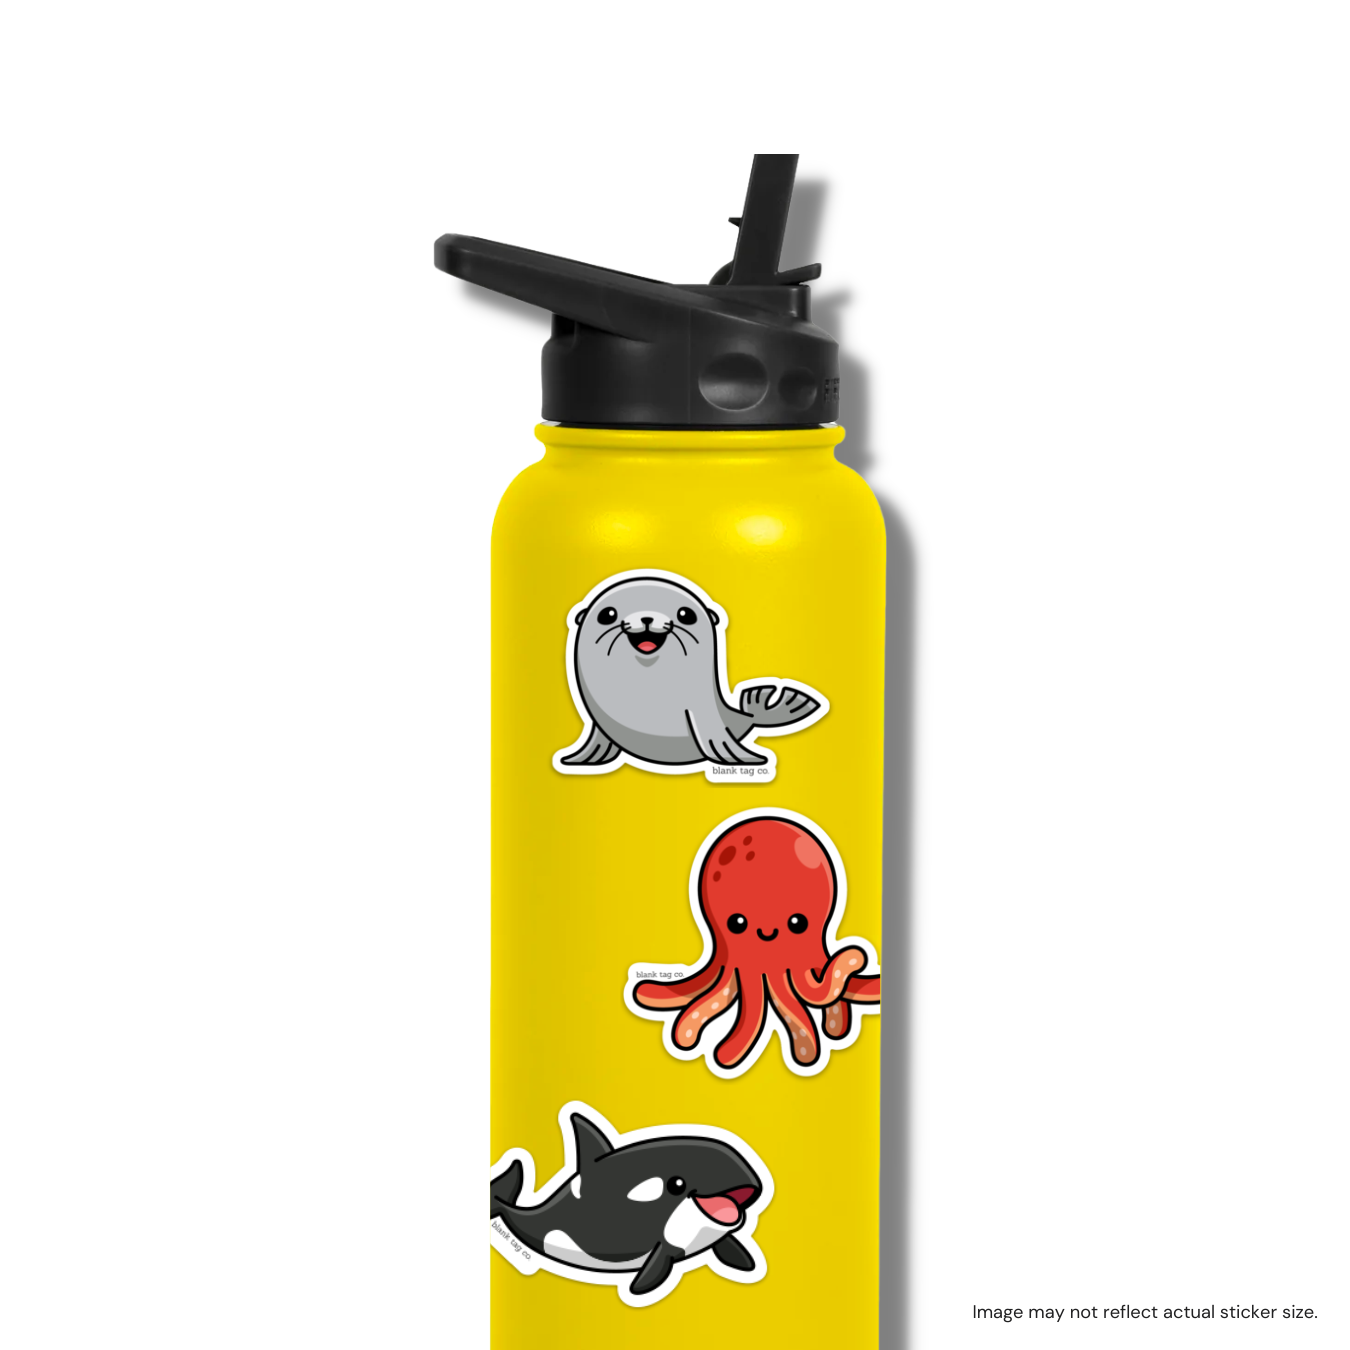 The Octopus Sticker